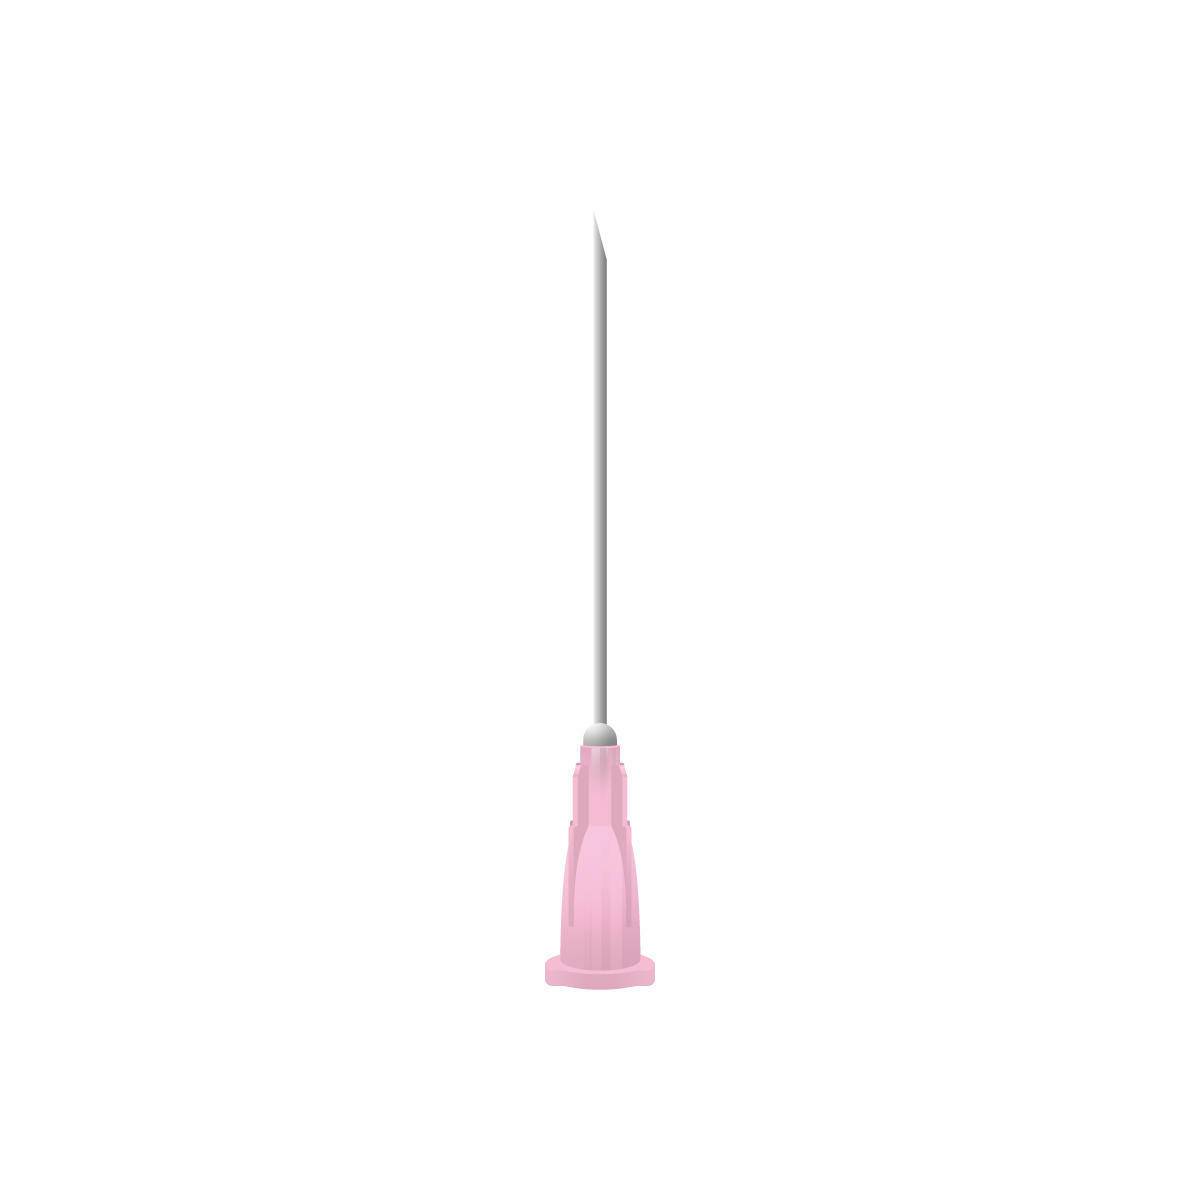 18g Pink 1.5 inch Terumo Needles - UKMEDI